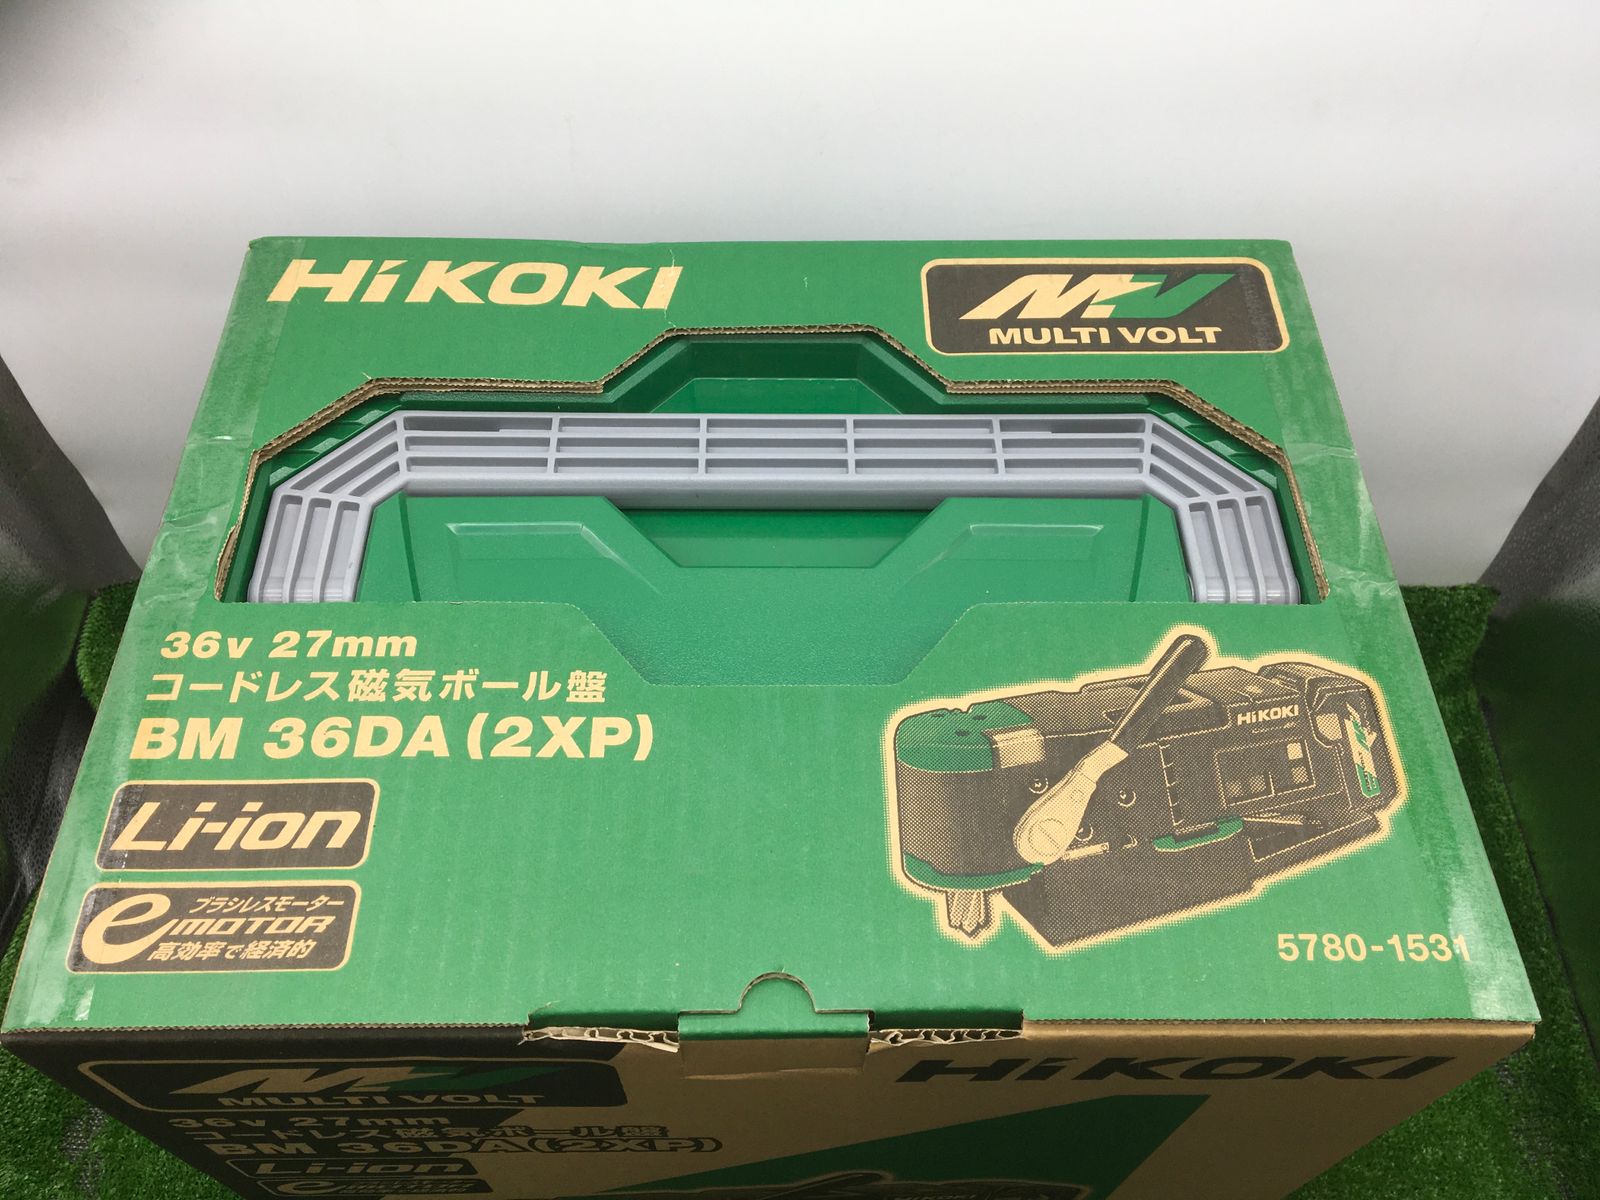 HIKOKI マルチボルト コードレス磁気ボール盤 BM36DA(2XP) - 9